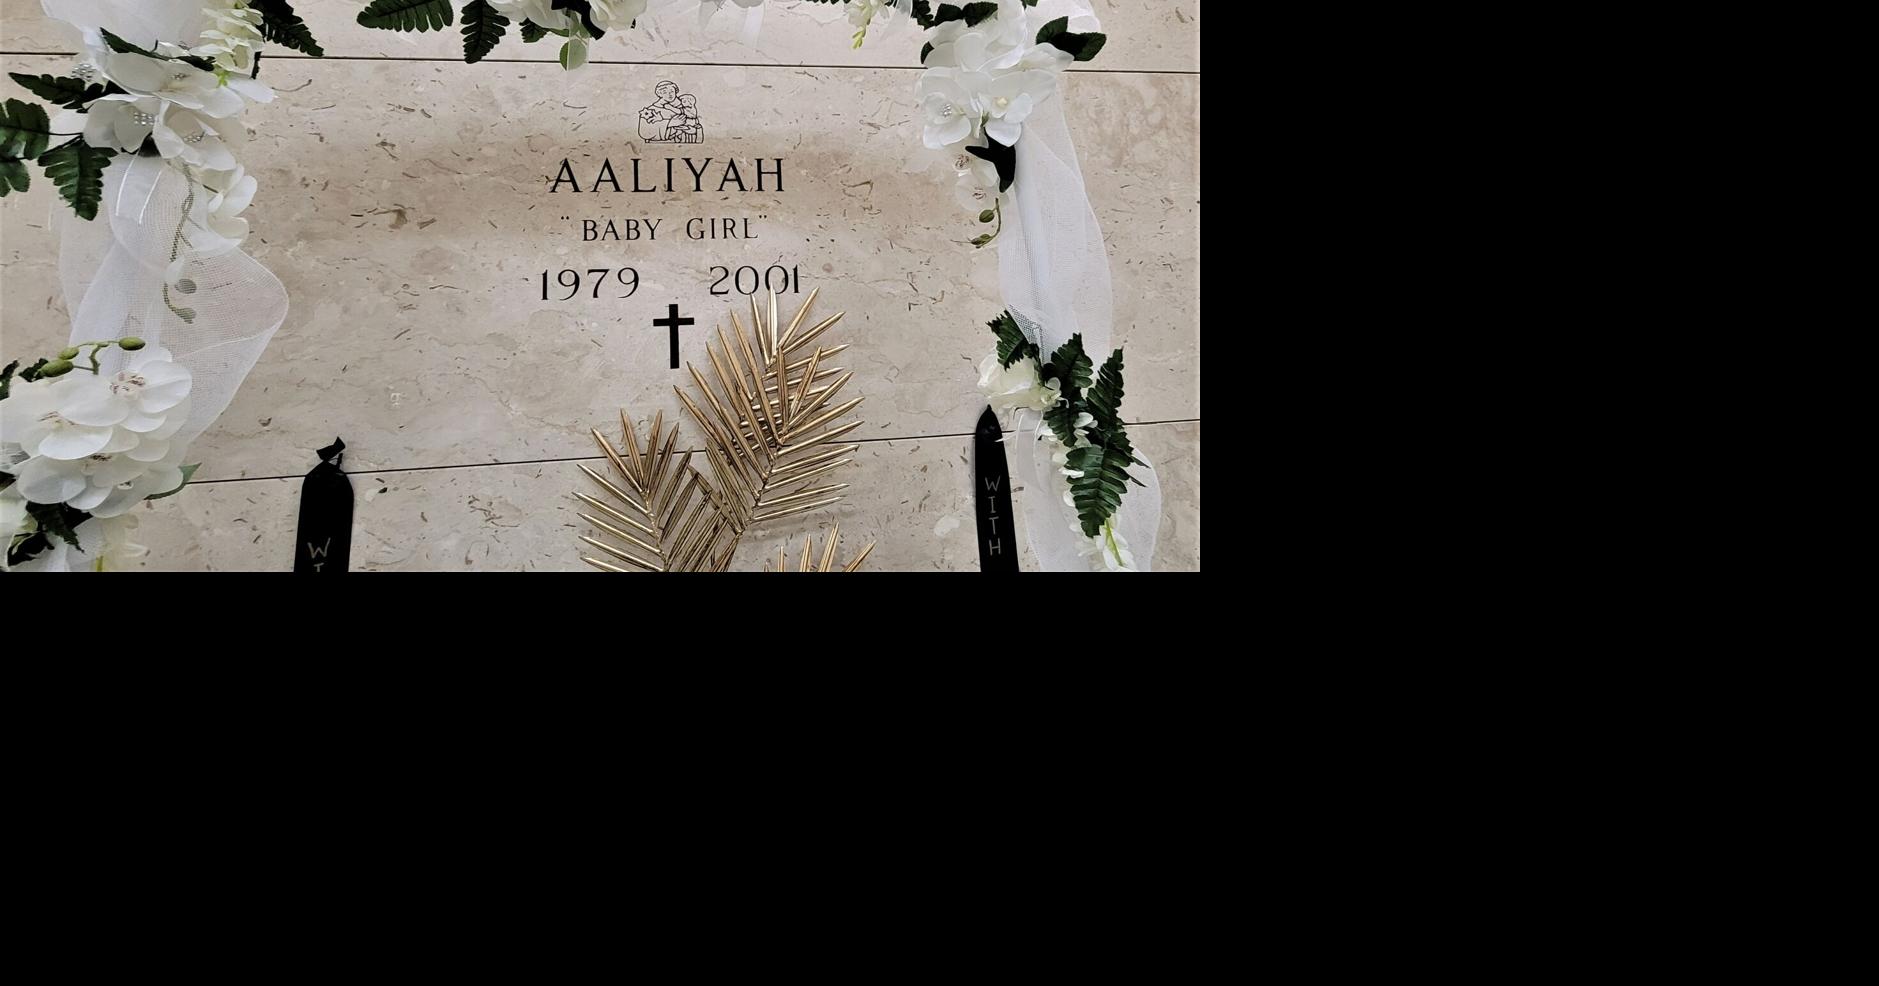 aaliyah casket open pictures